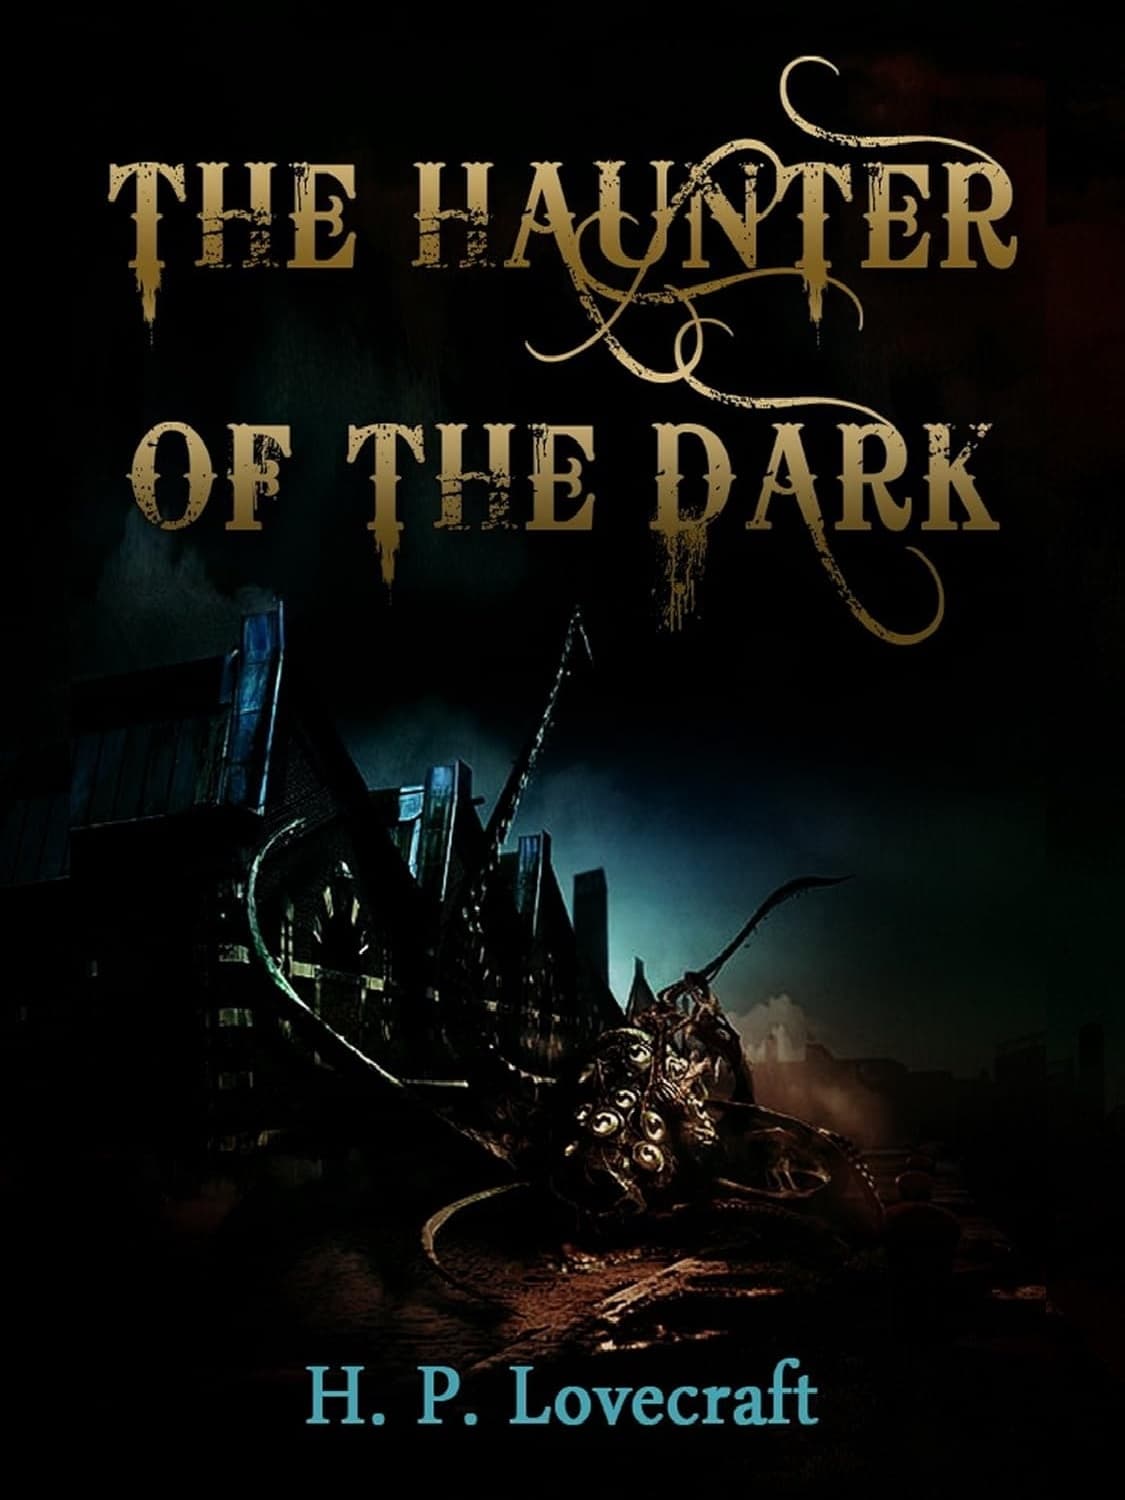 H.P. Lovecraft's The Haunter of the Dark